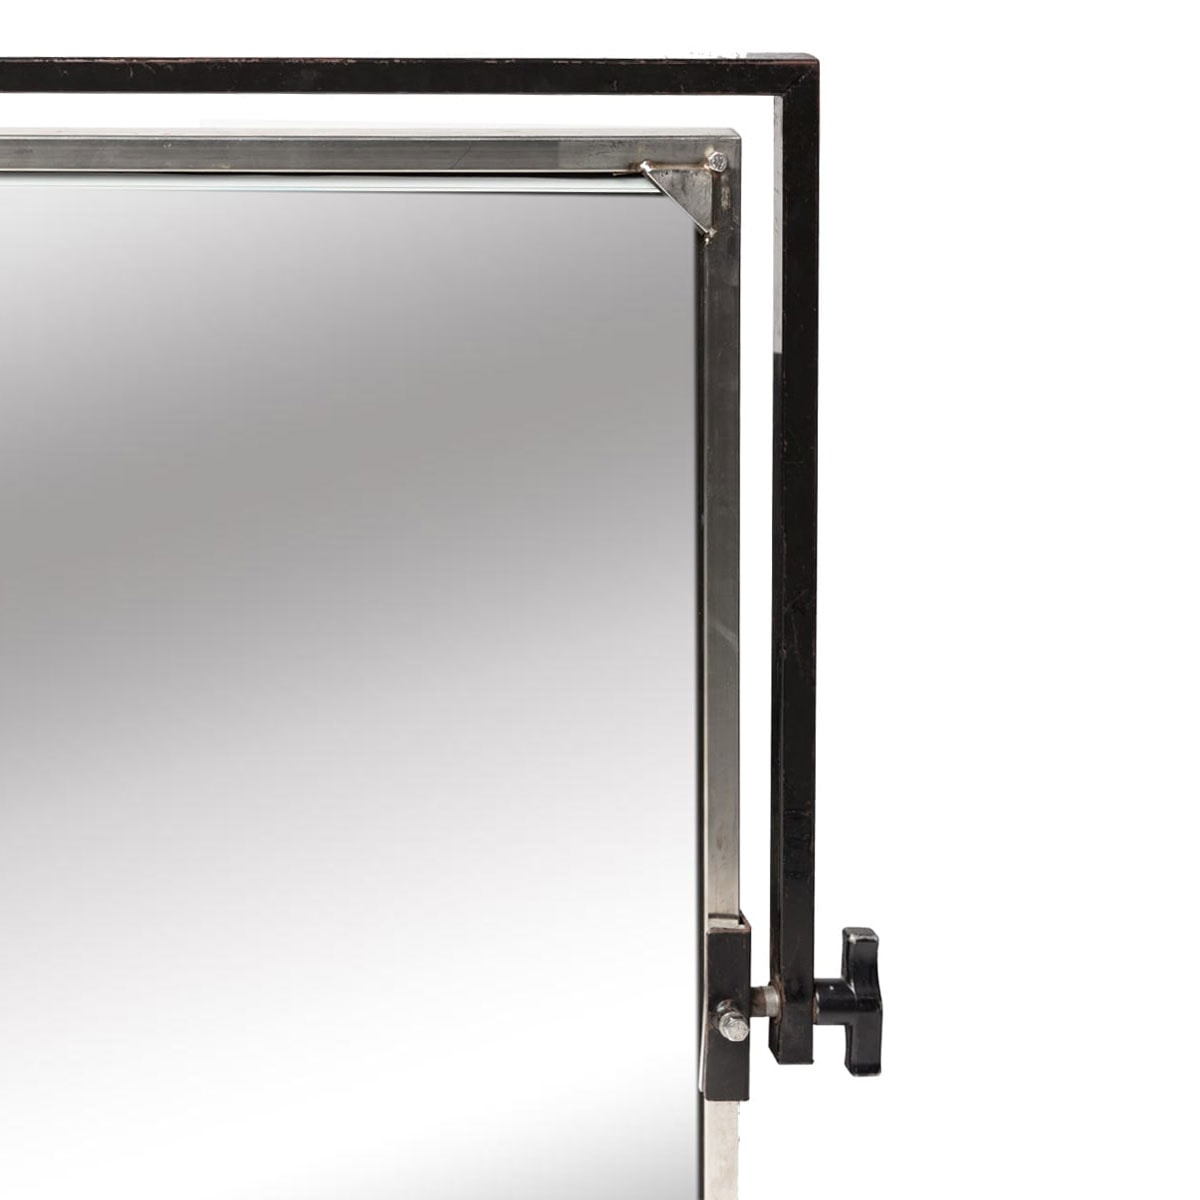  Mirror boards, mirror and silver, 120 x 120 cm / 4 x 4'